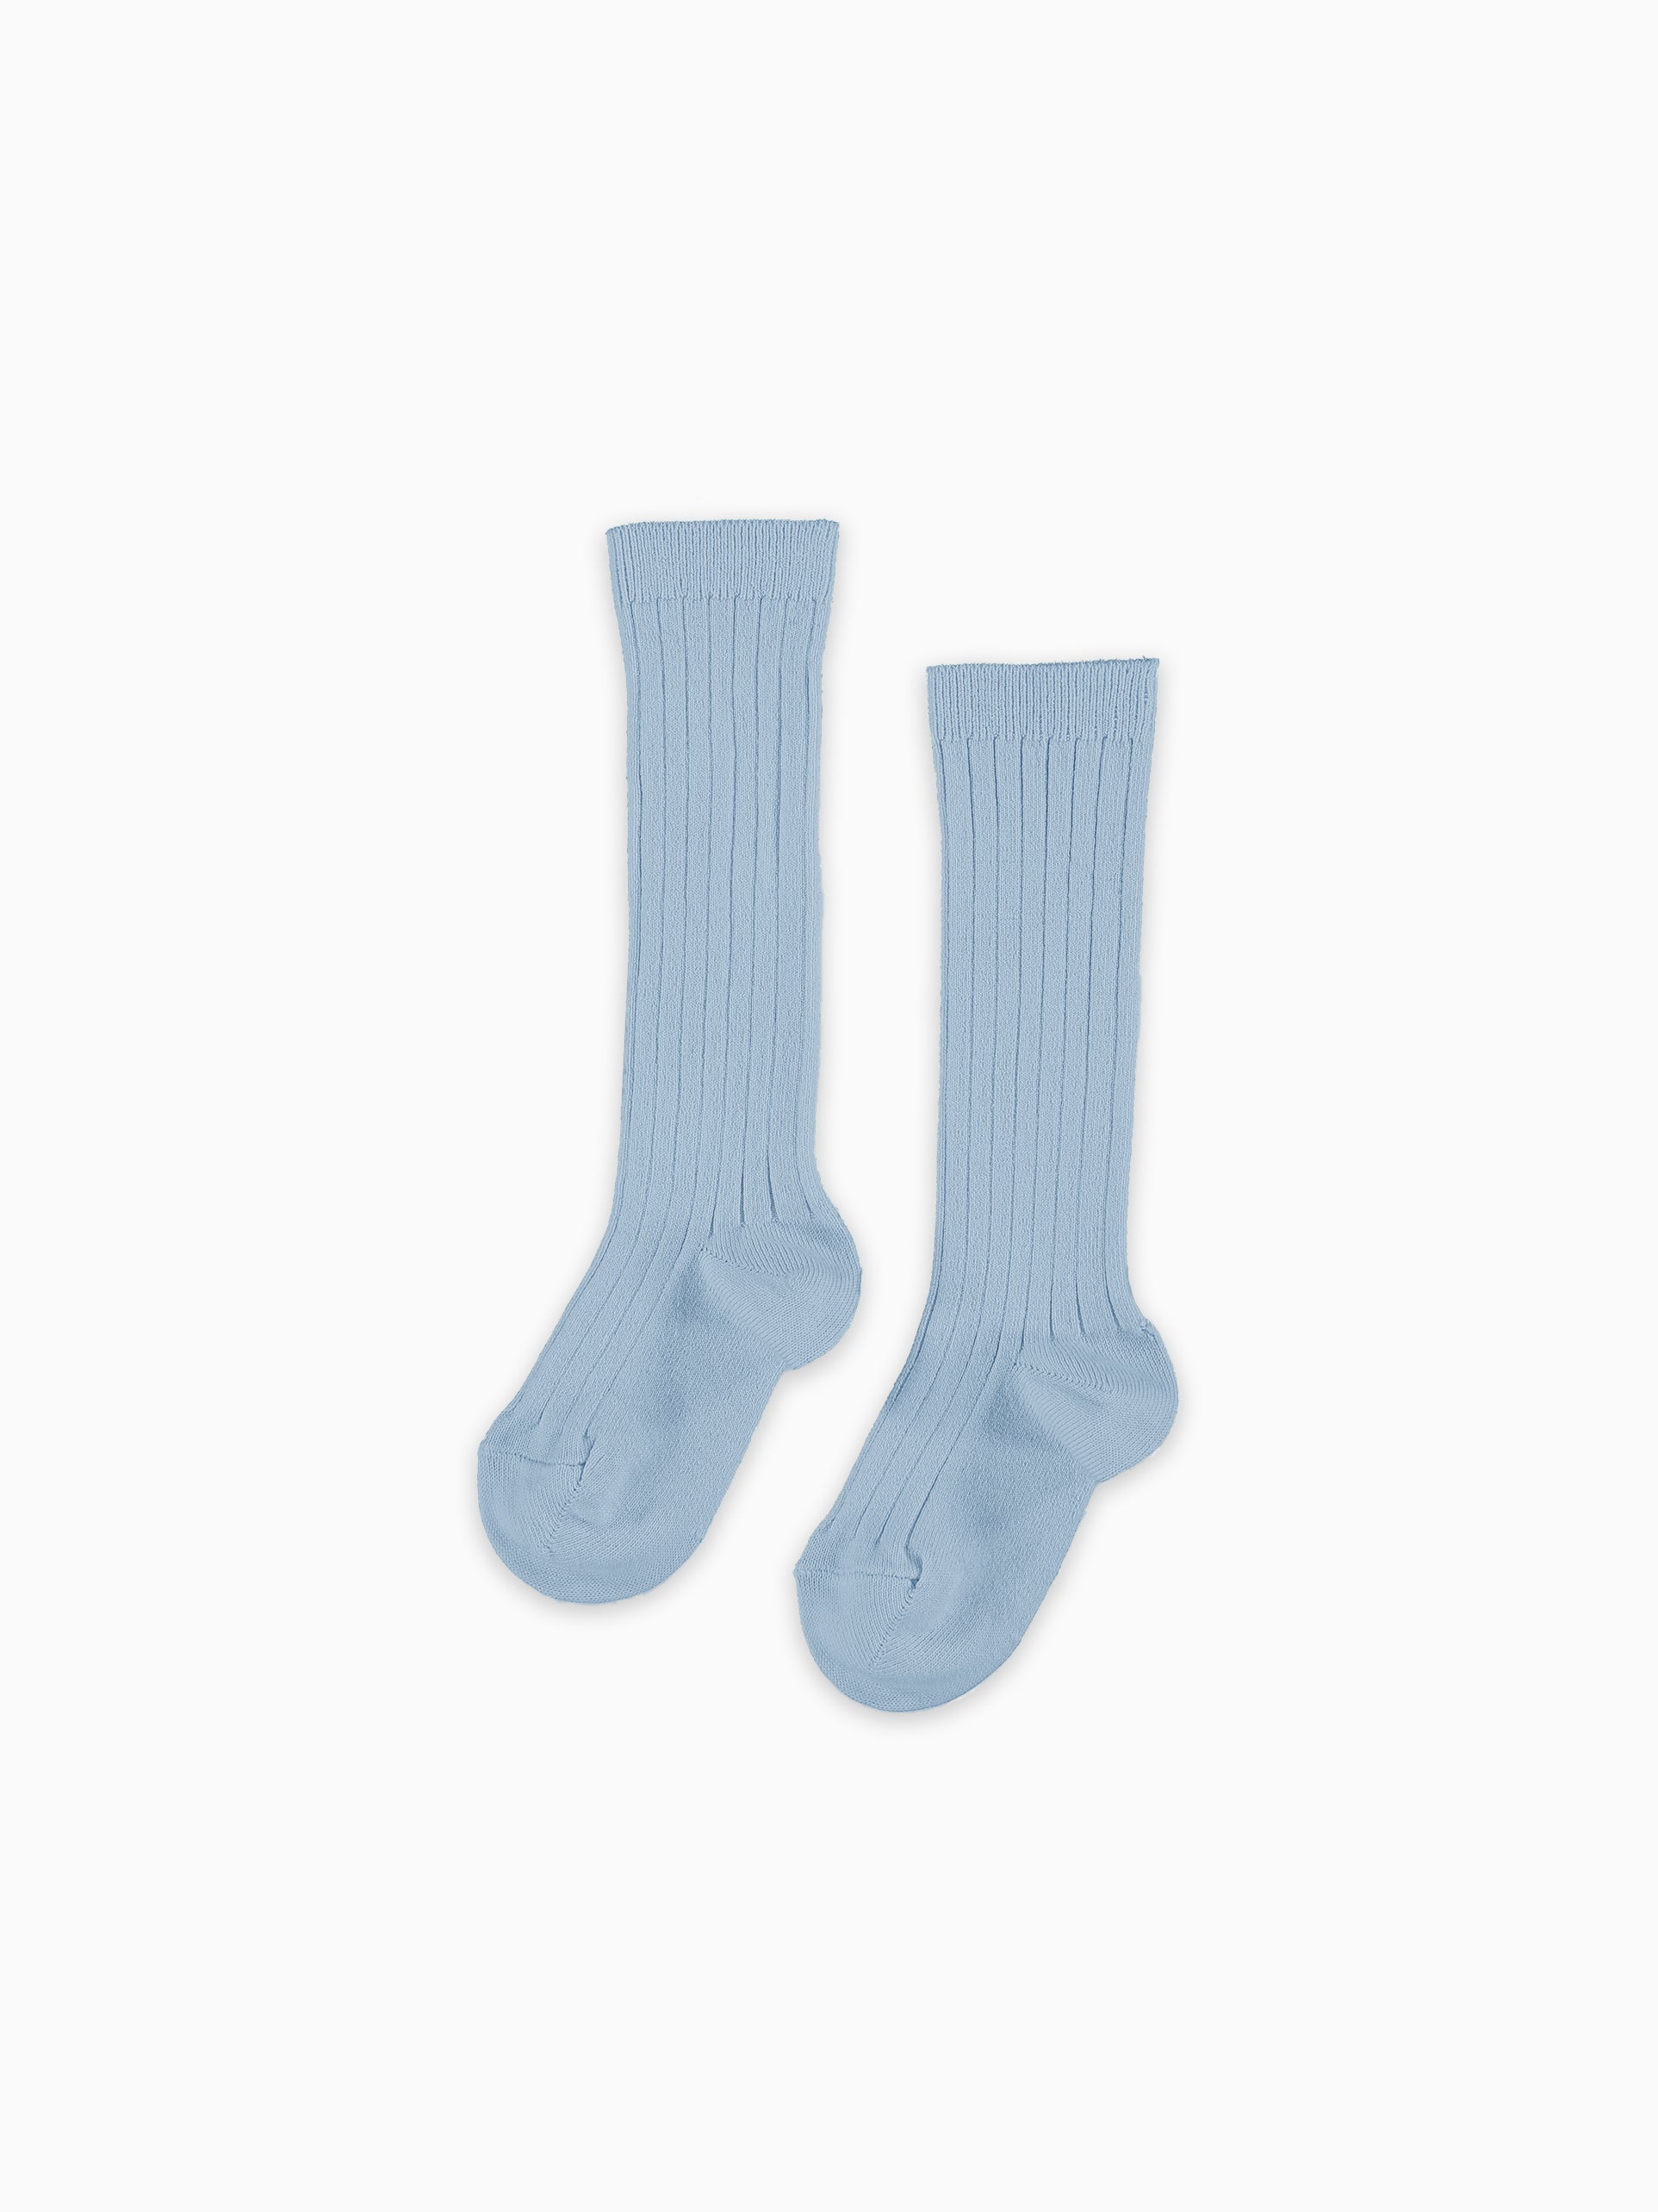 Stone Blue Tights  Children socks by the Spanish label Condor